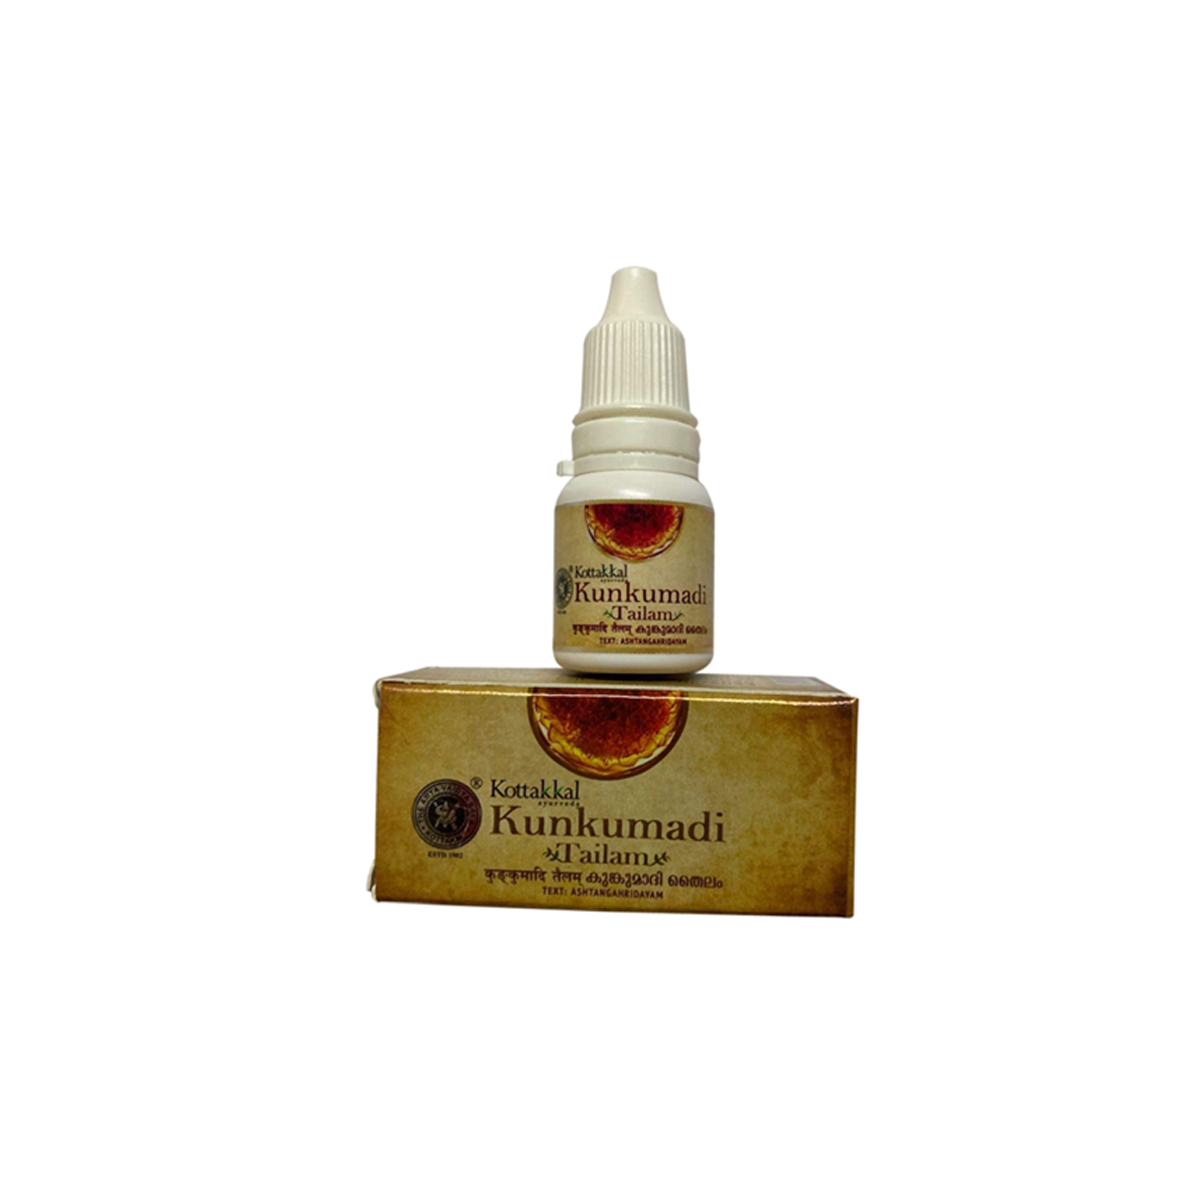 Kottakkal Kunkumadi Tailam - Ayurvedic Face Massage Oil - Best Natural  Products